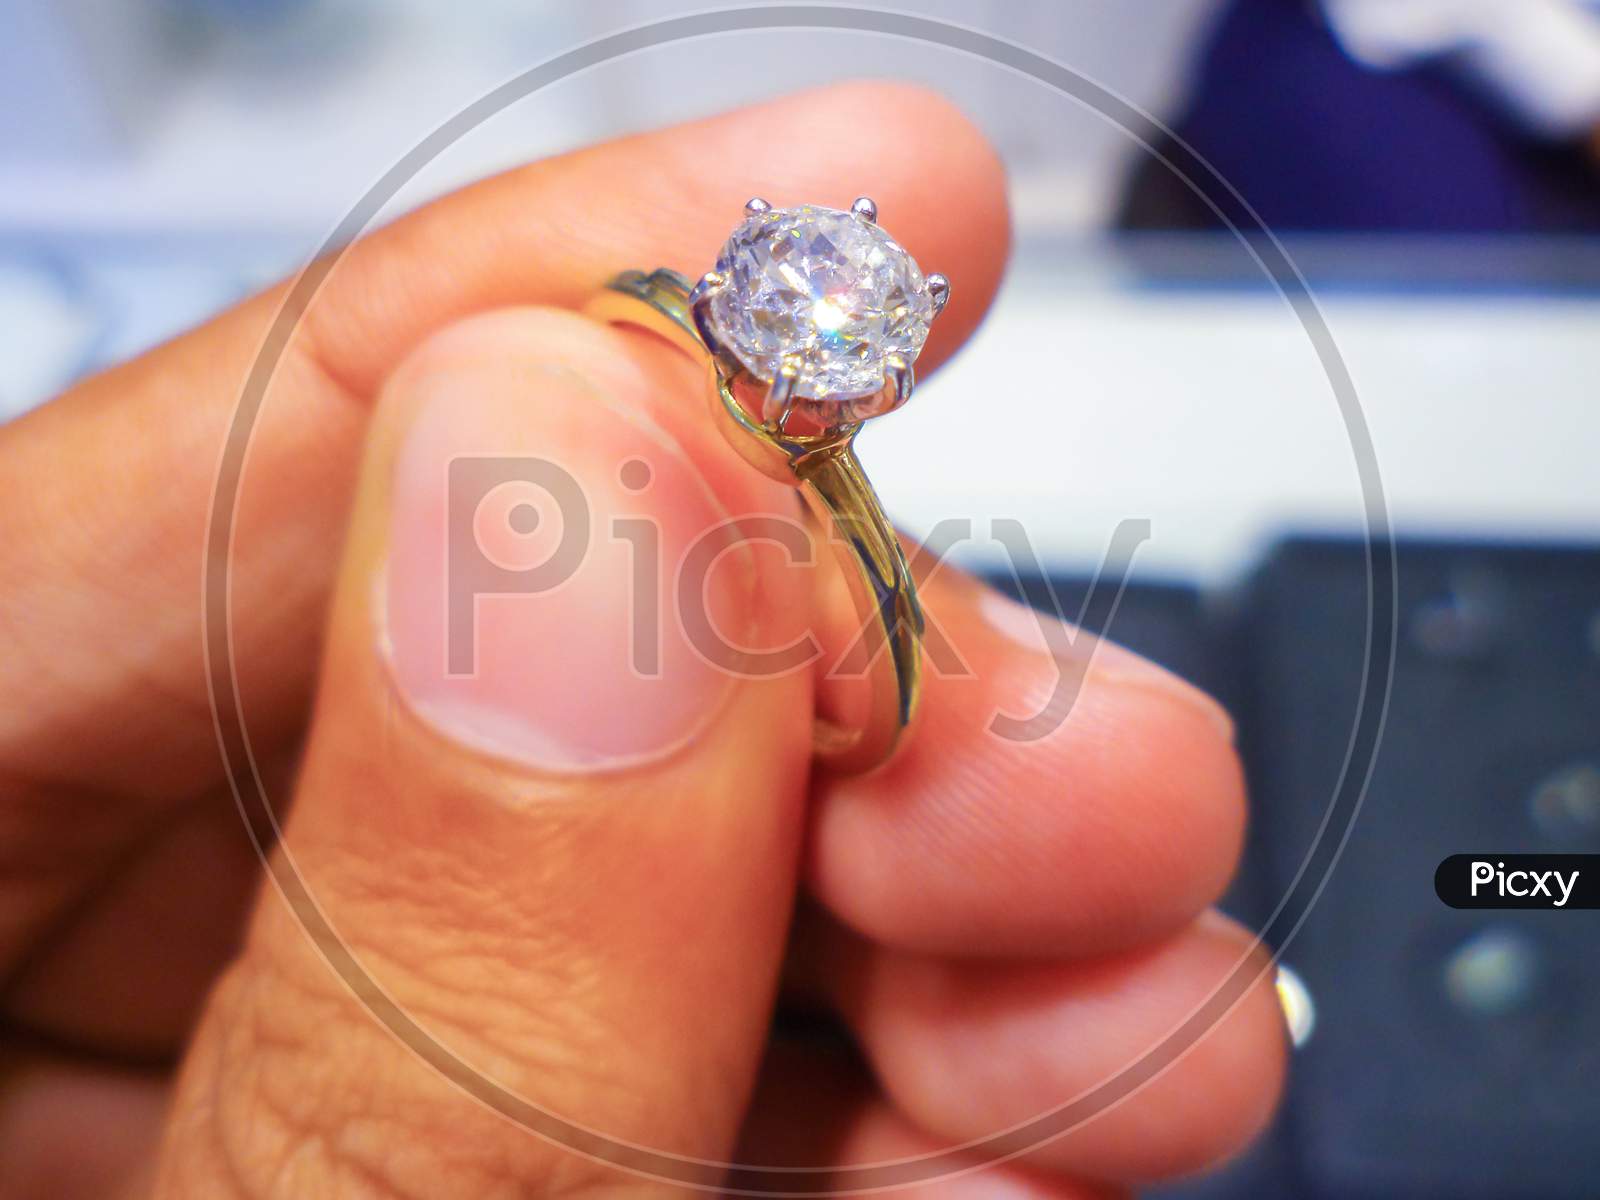 Male Jeweler Holding Diamond Ring, Closeup View